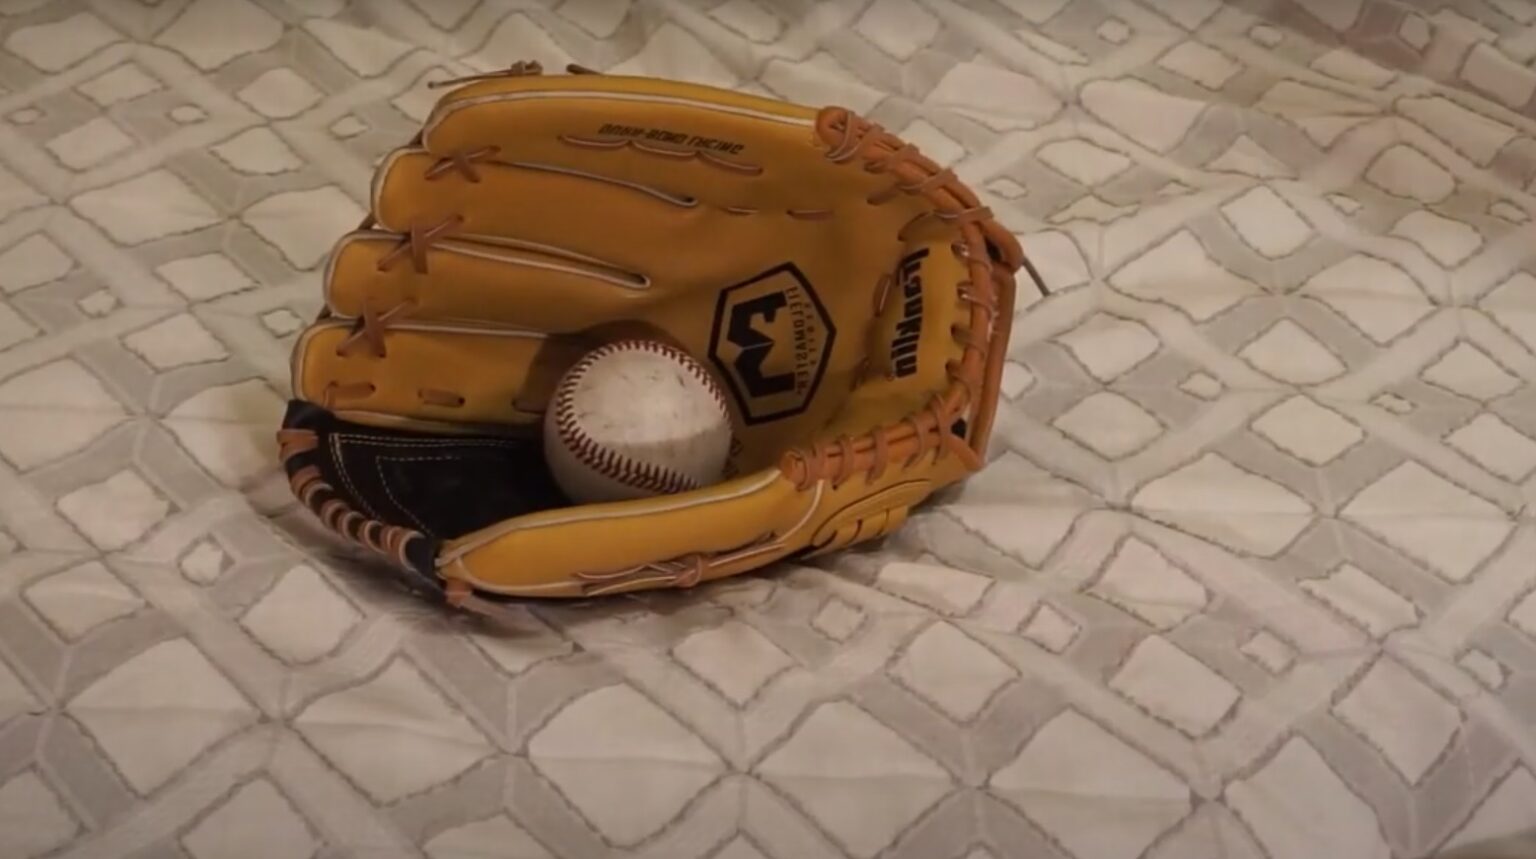 Franklin Kids Baseball Glove